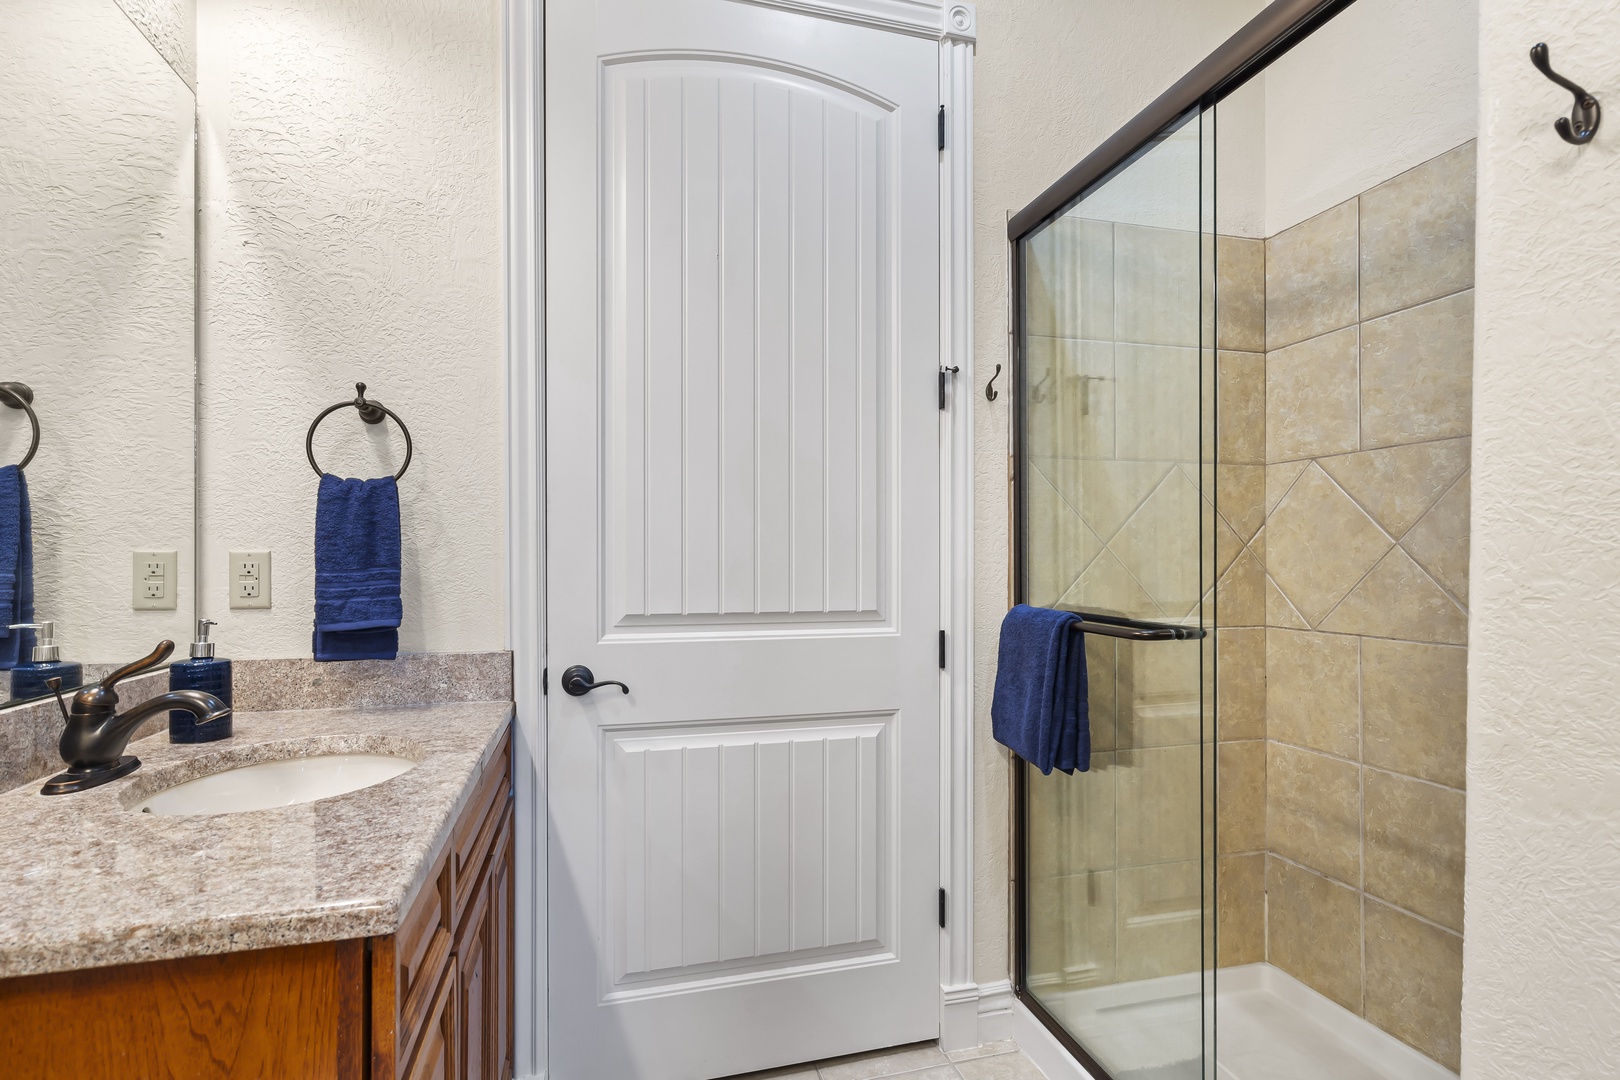 Bathroom 2 en-suite with double vanity, separate shower, and soaking tub